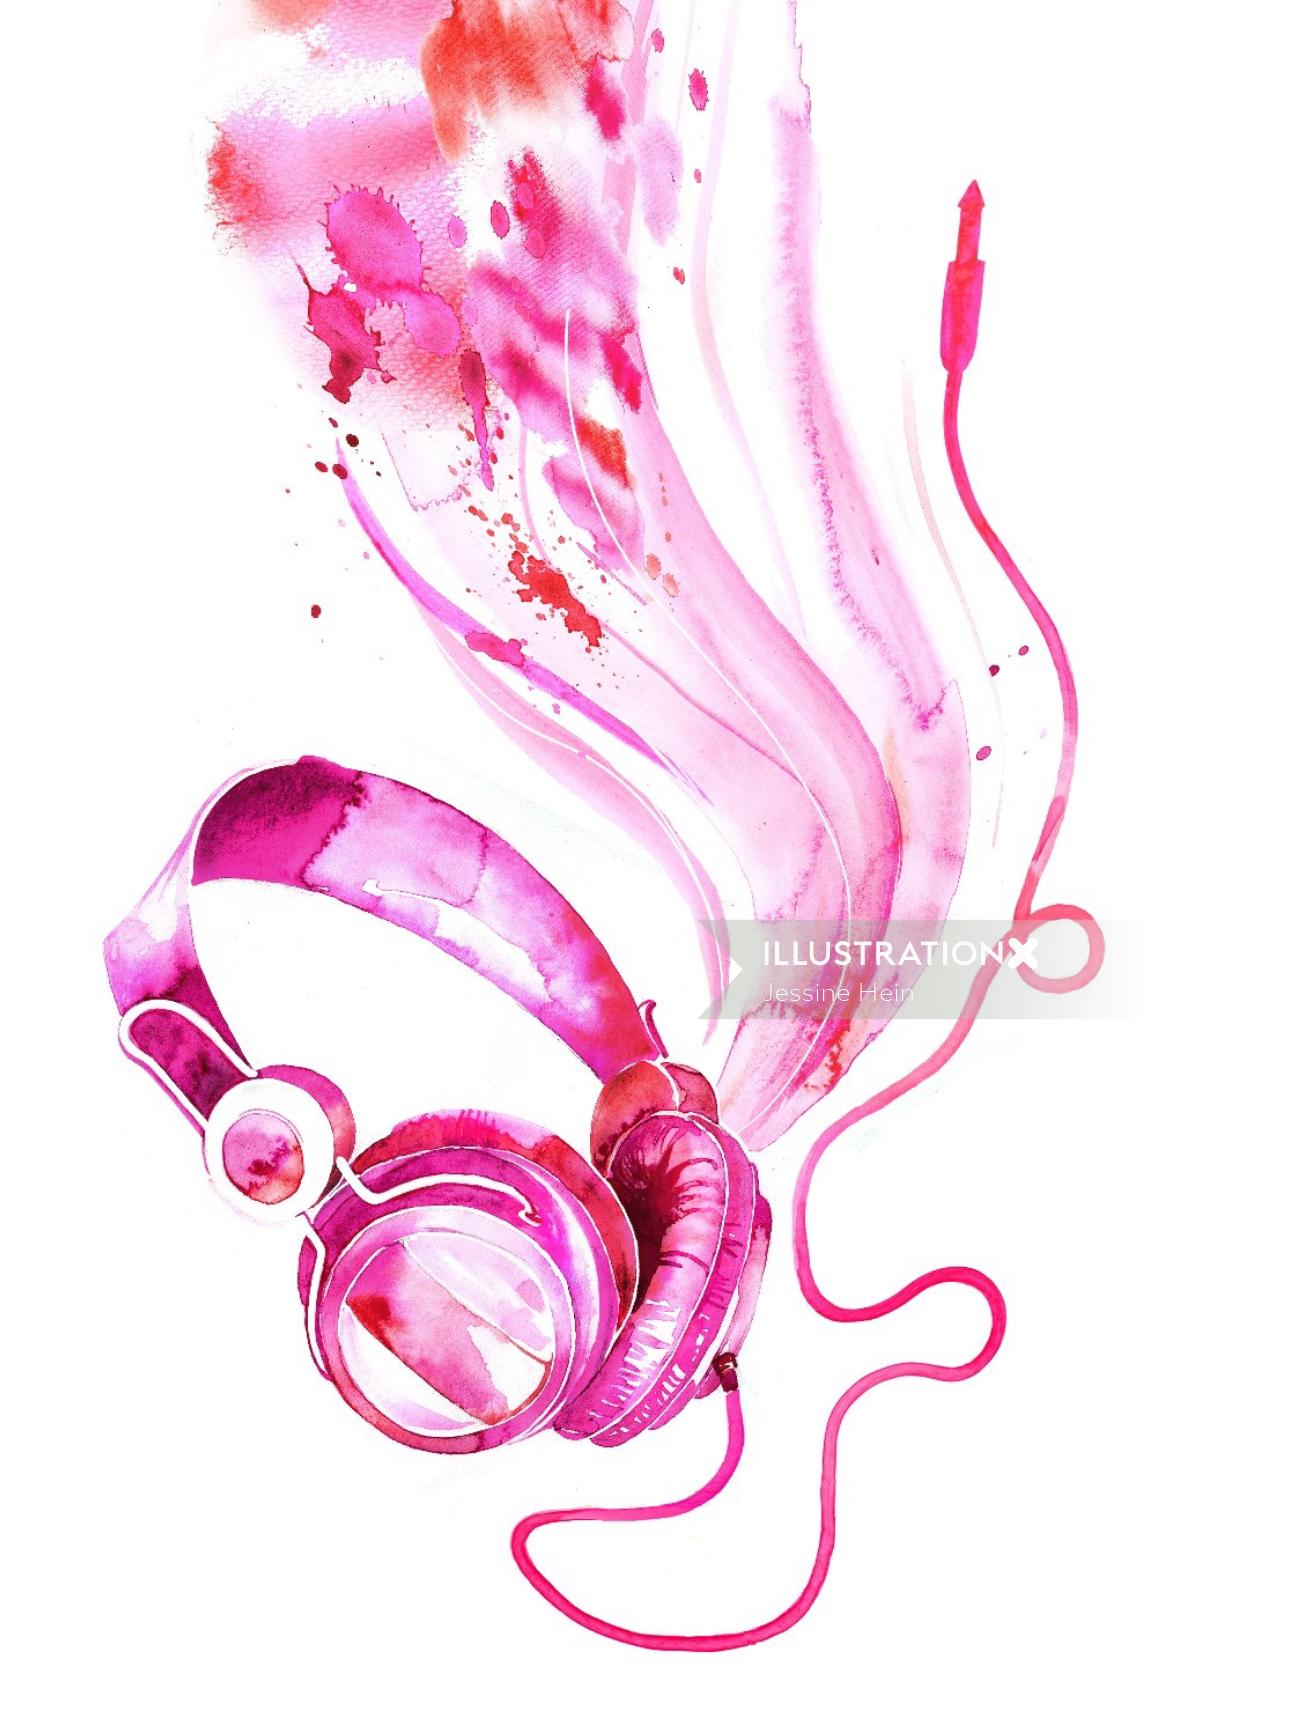 Watercolor Sketch of the Pink headphones